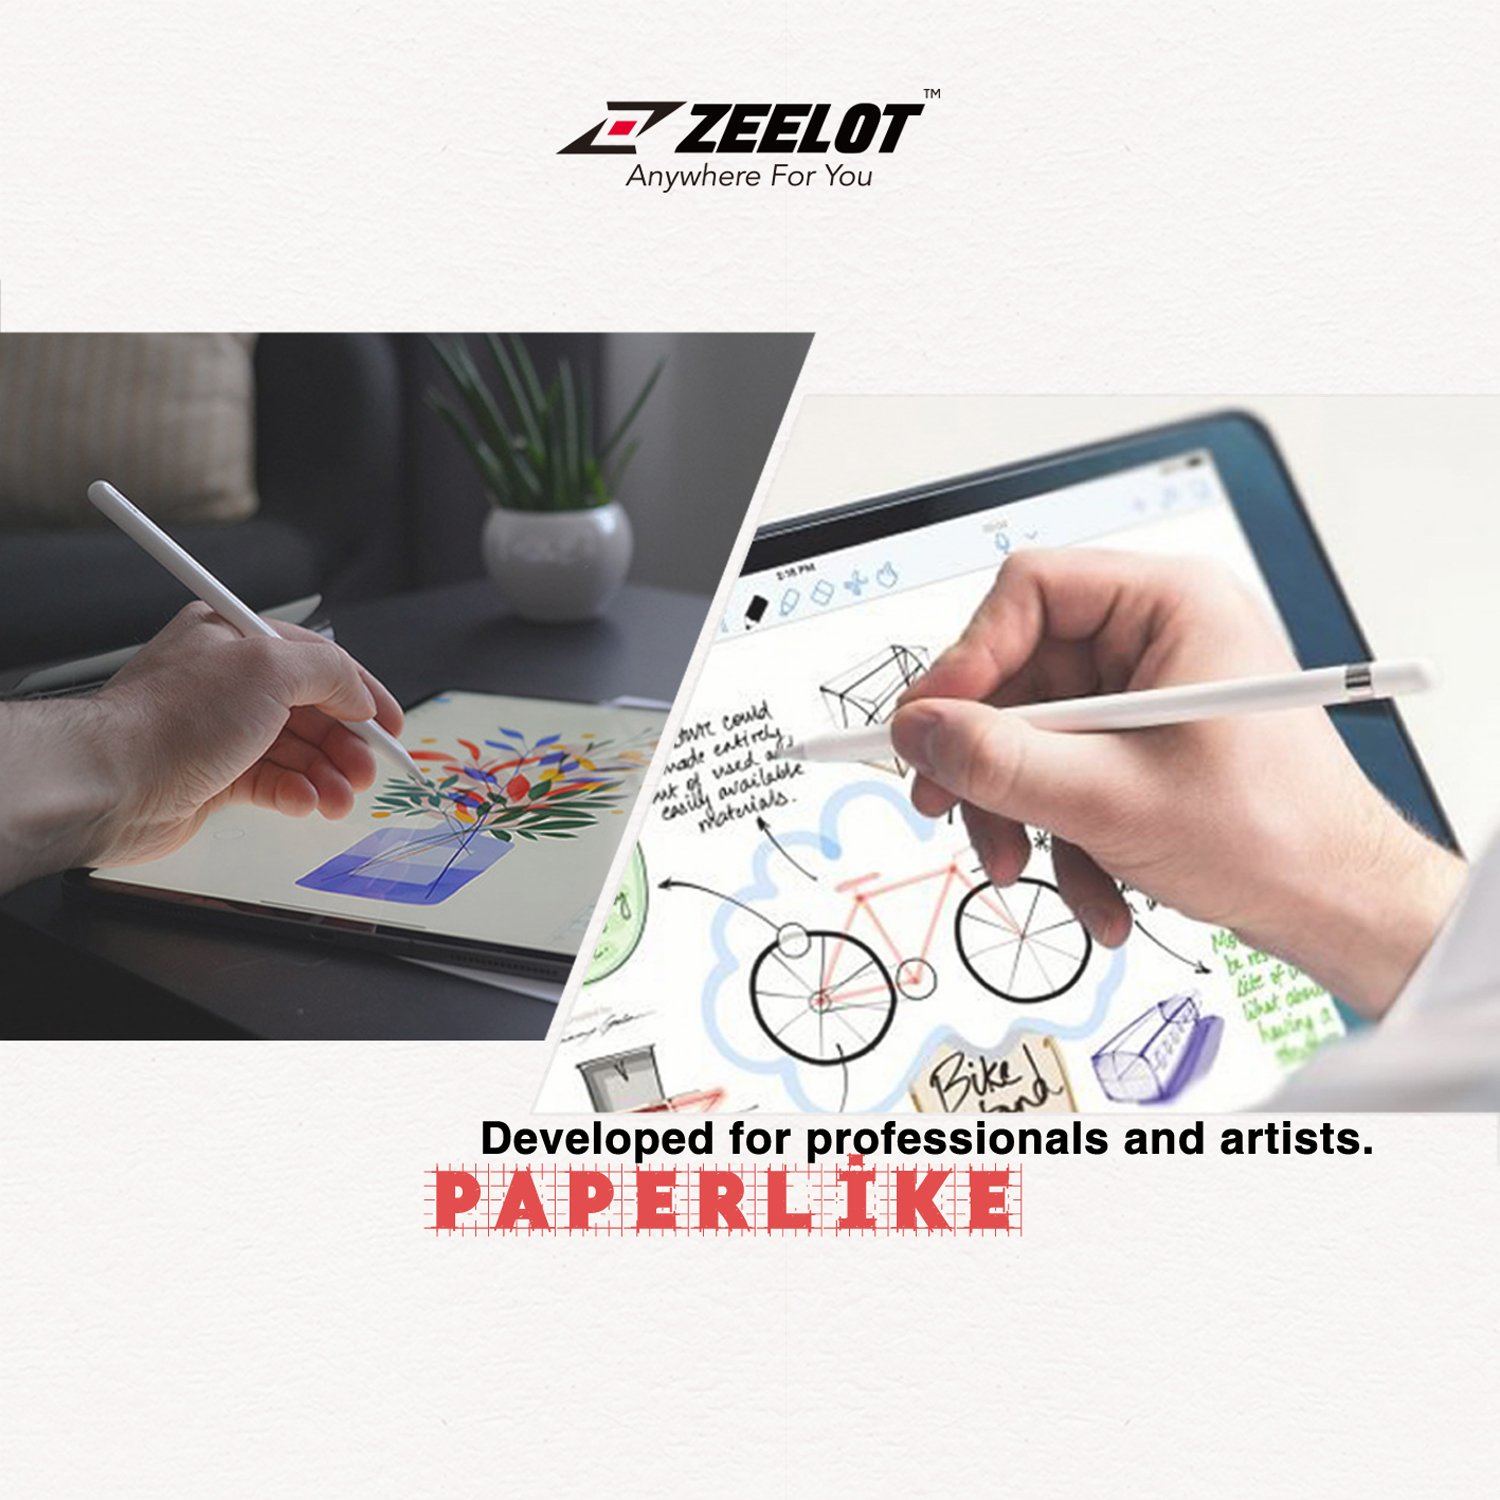 ZEELOT Anti Blue Ray Paper Like Screen Protector for iPad Pro 12.9"(2021/2018) Default Zeelot 